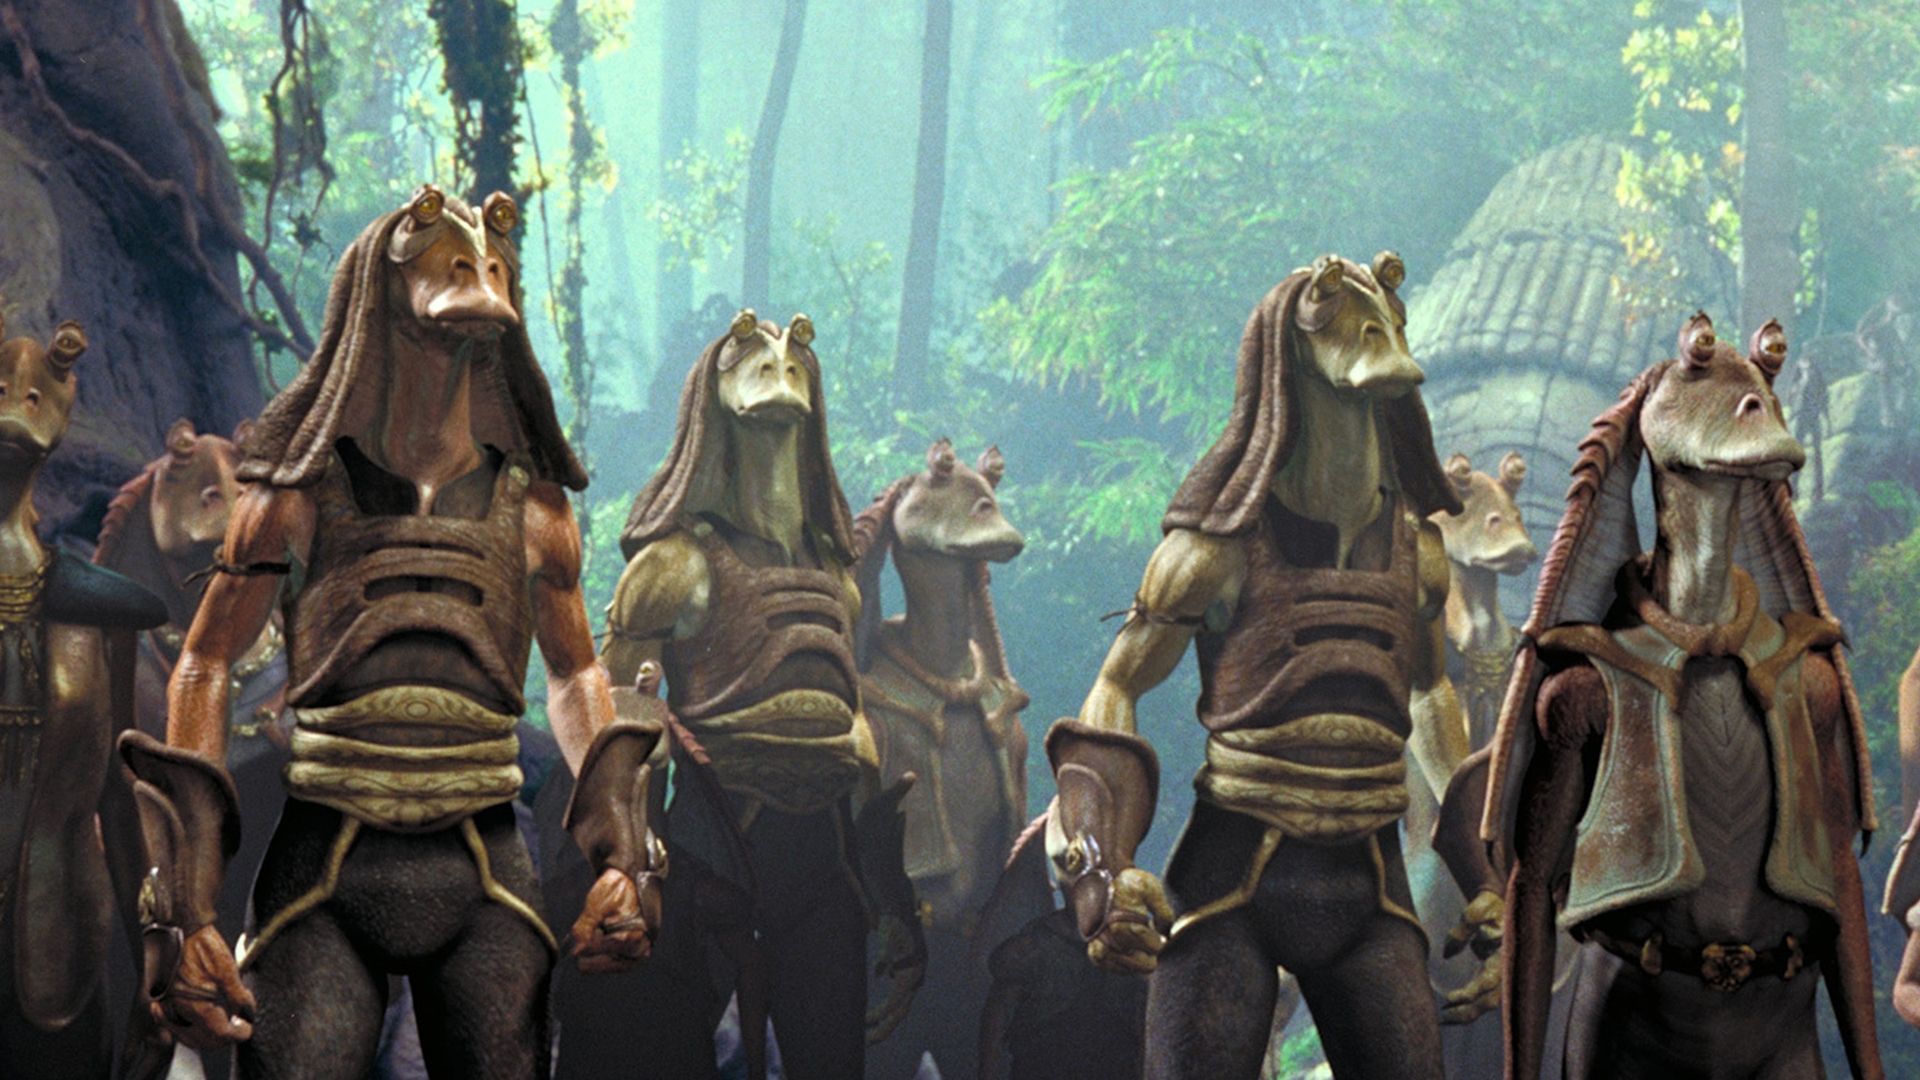 Star Wars Gungan soldiers in a forest